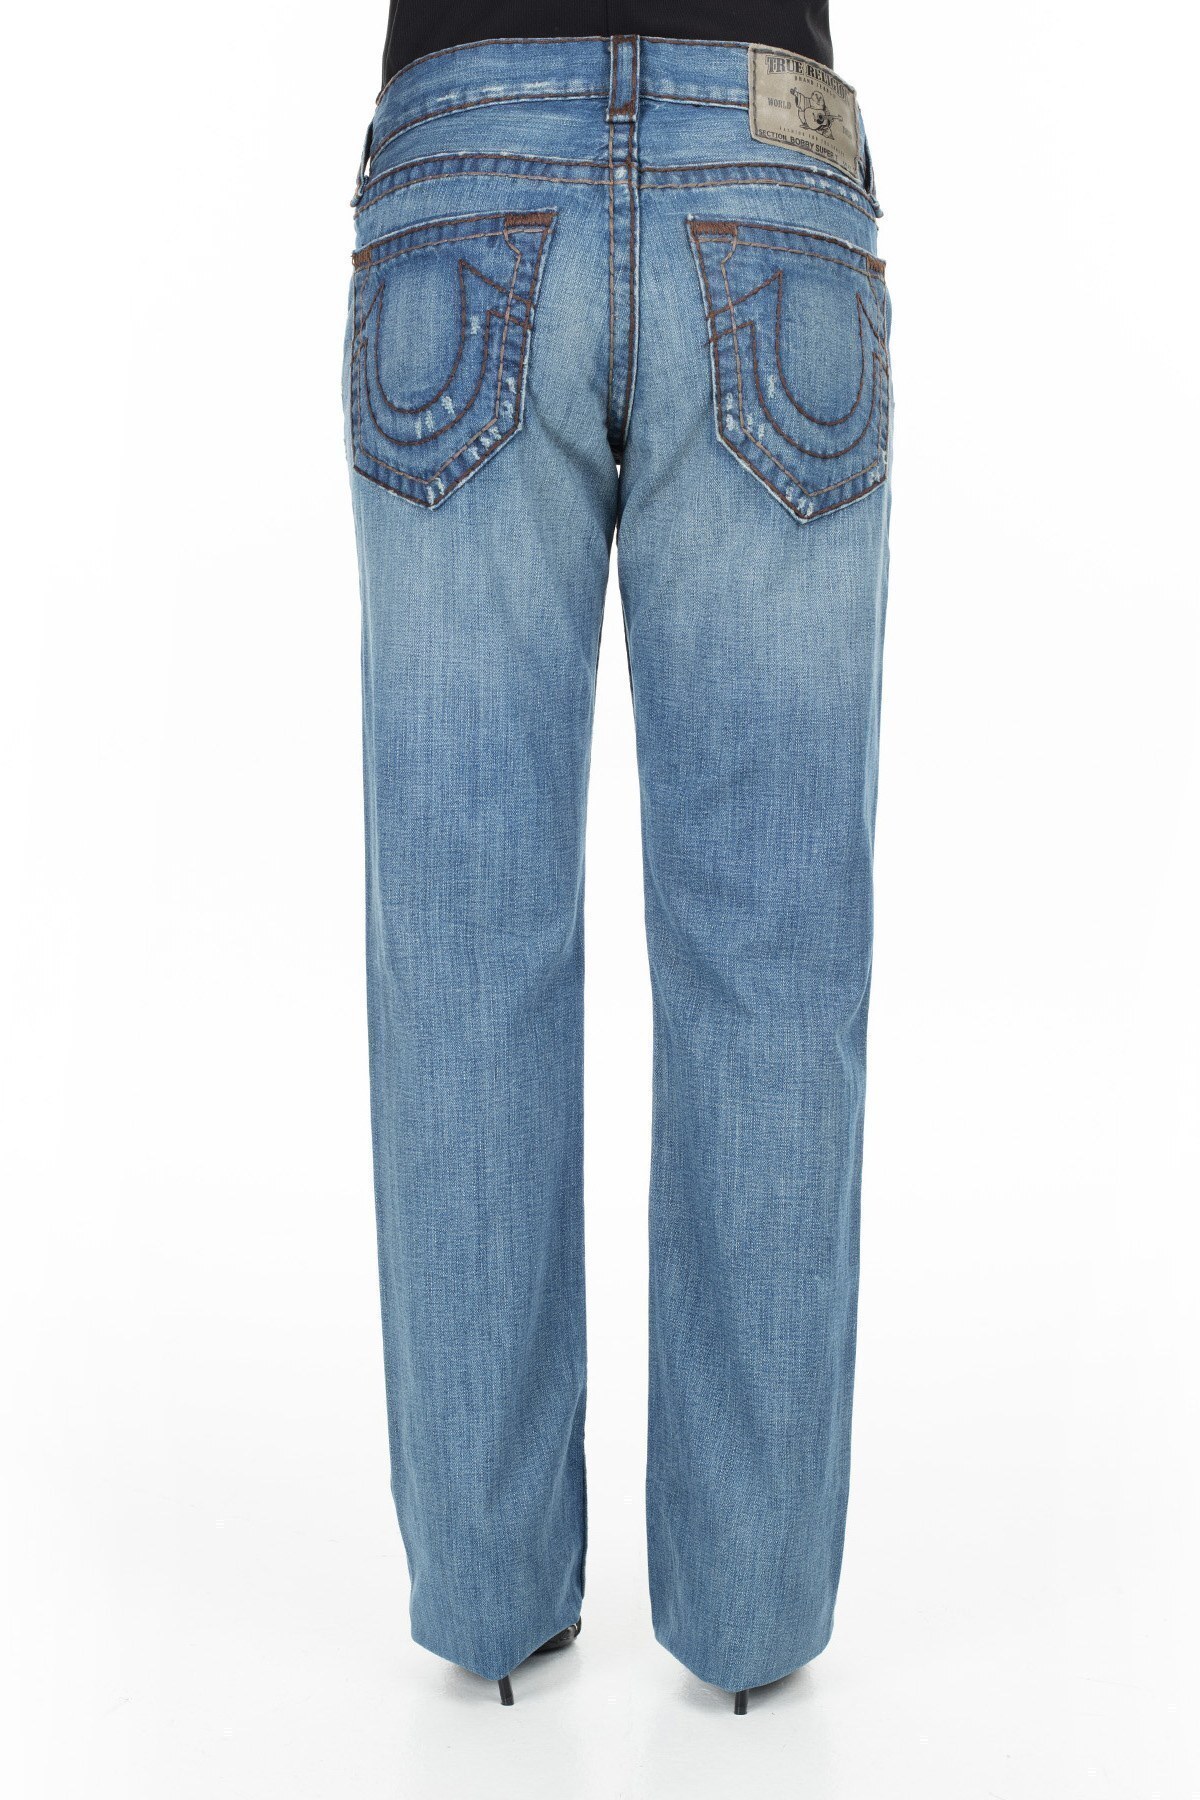 True Religion Jeans Erkek Kot Pantolon M24800M38 LACİVERT